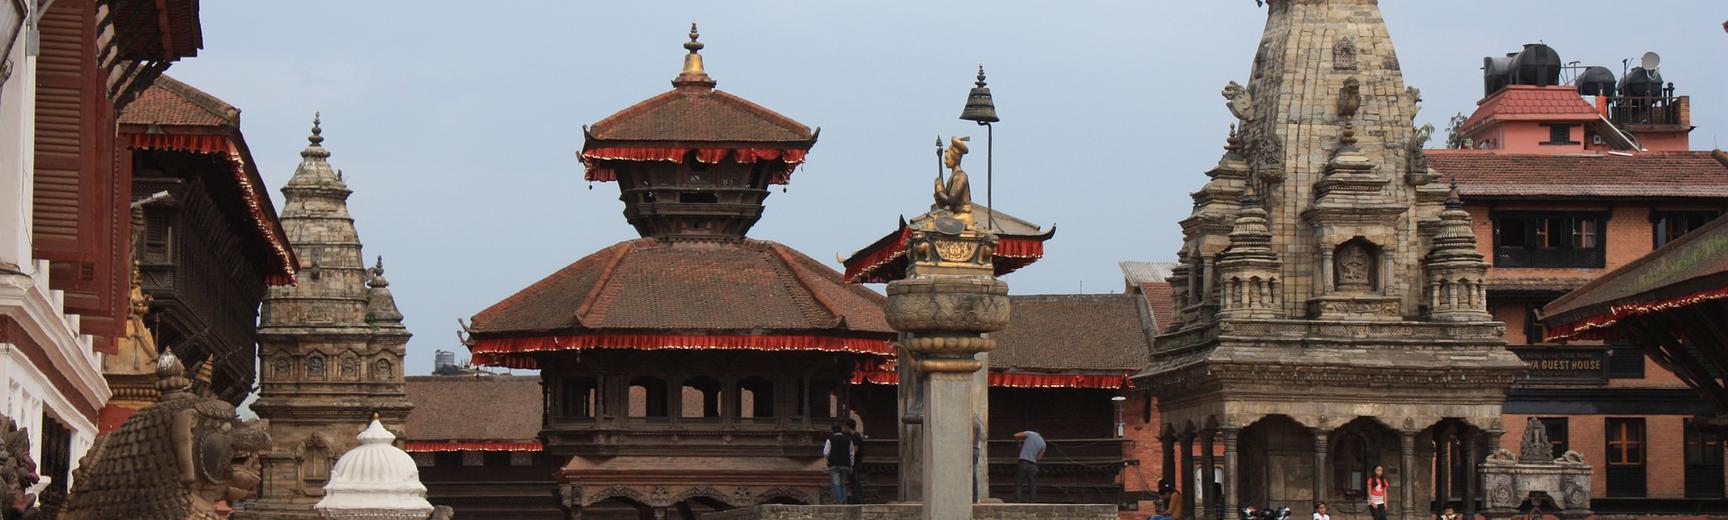 Durbar square of Bhaktapur in Kathmandu, Nepal